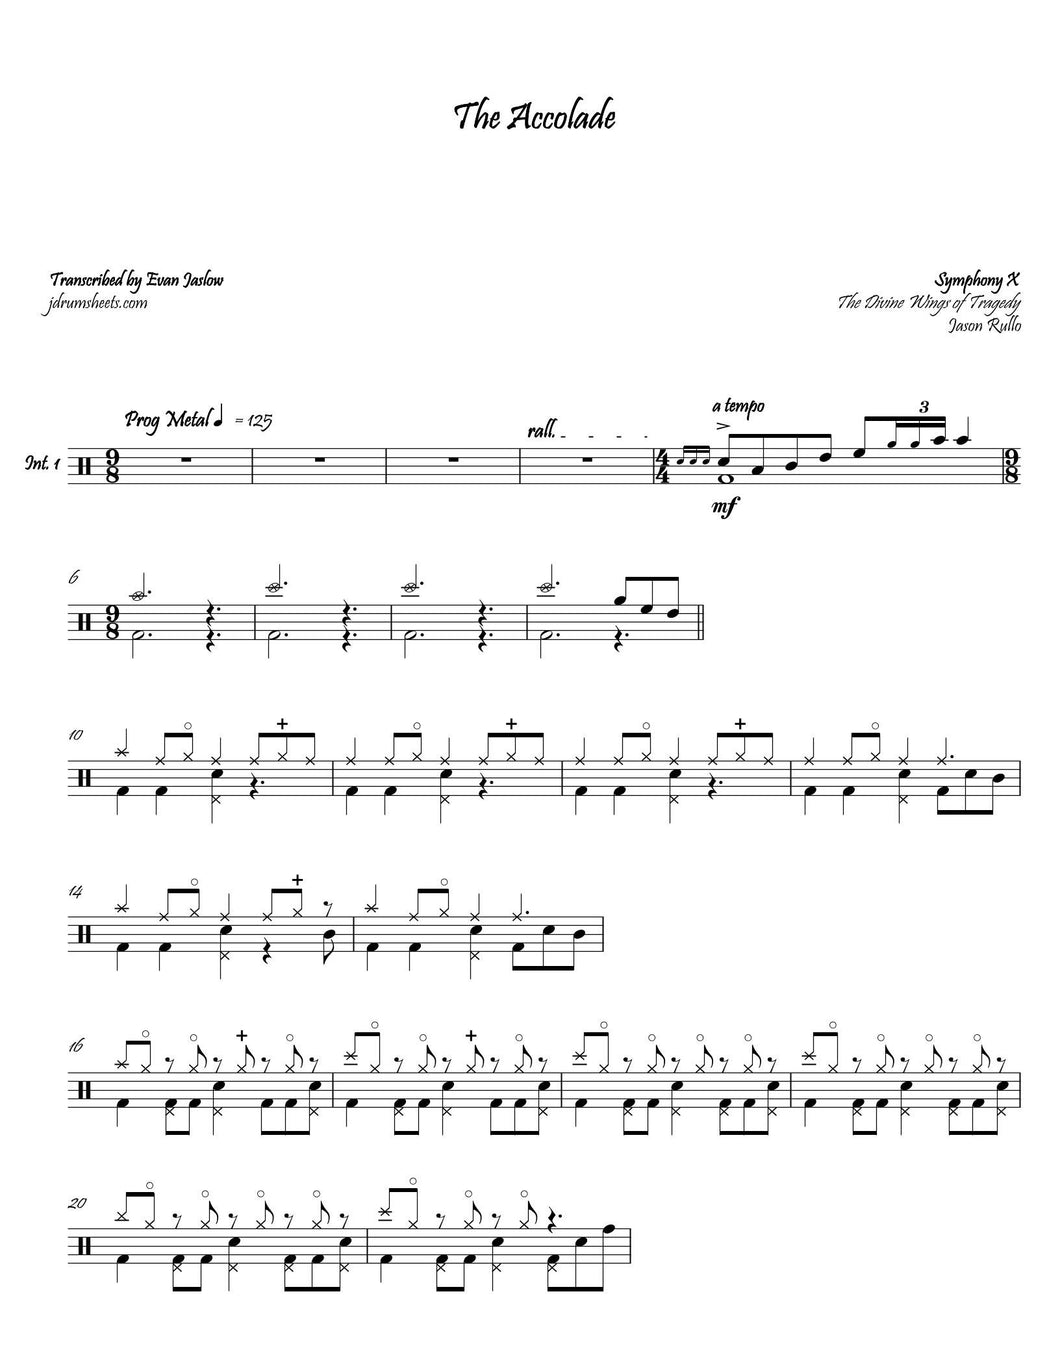 The Accolade - Symphony X - Full Drum Transcription / Drum Sheet Music - Jaslow Drum Sheets